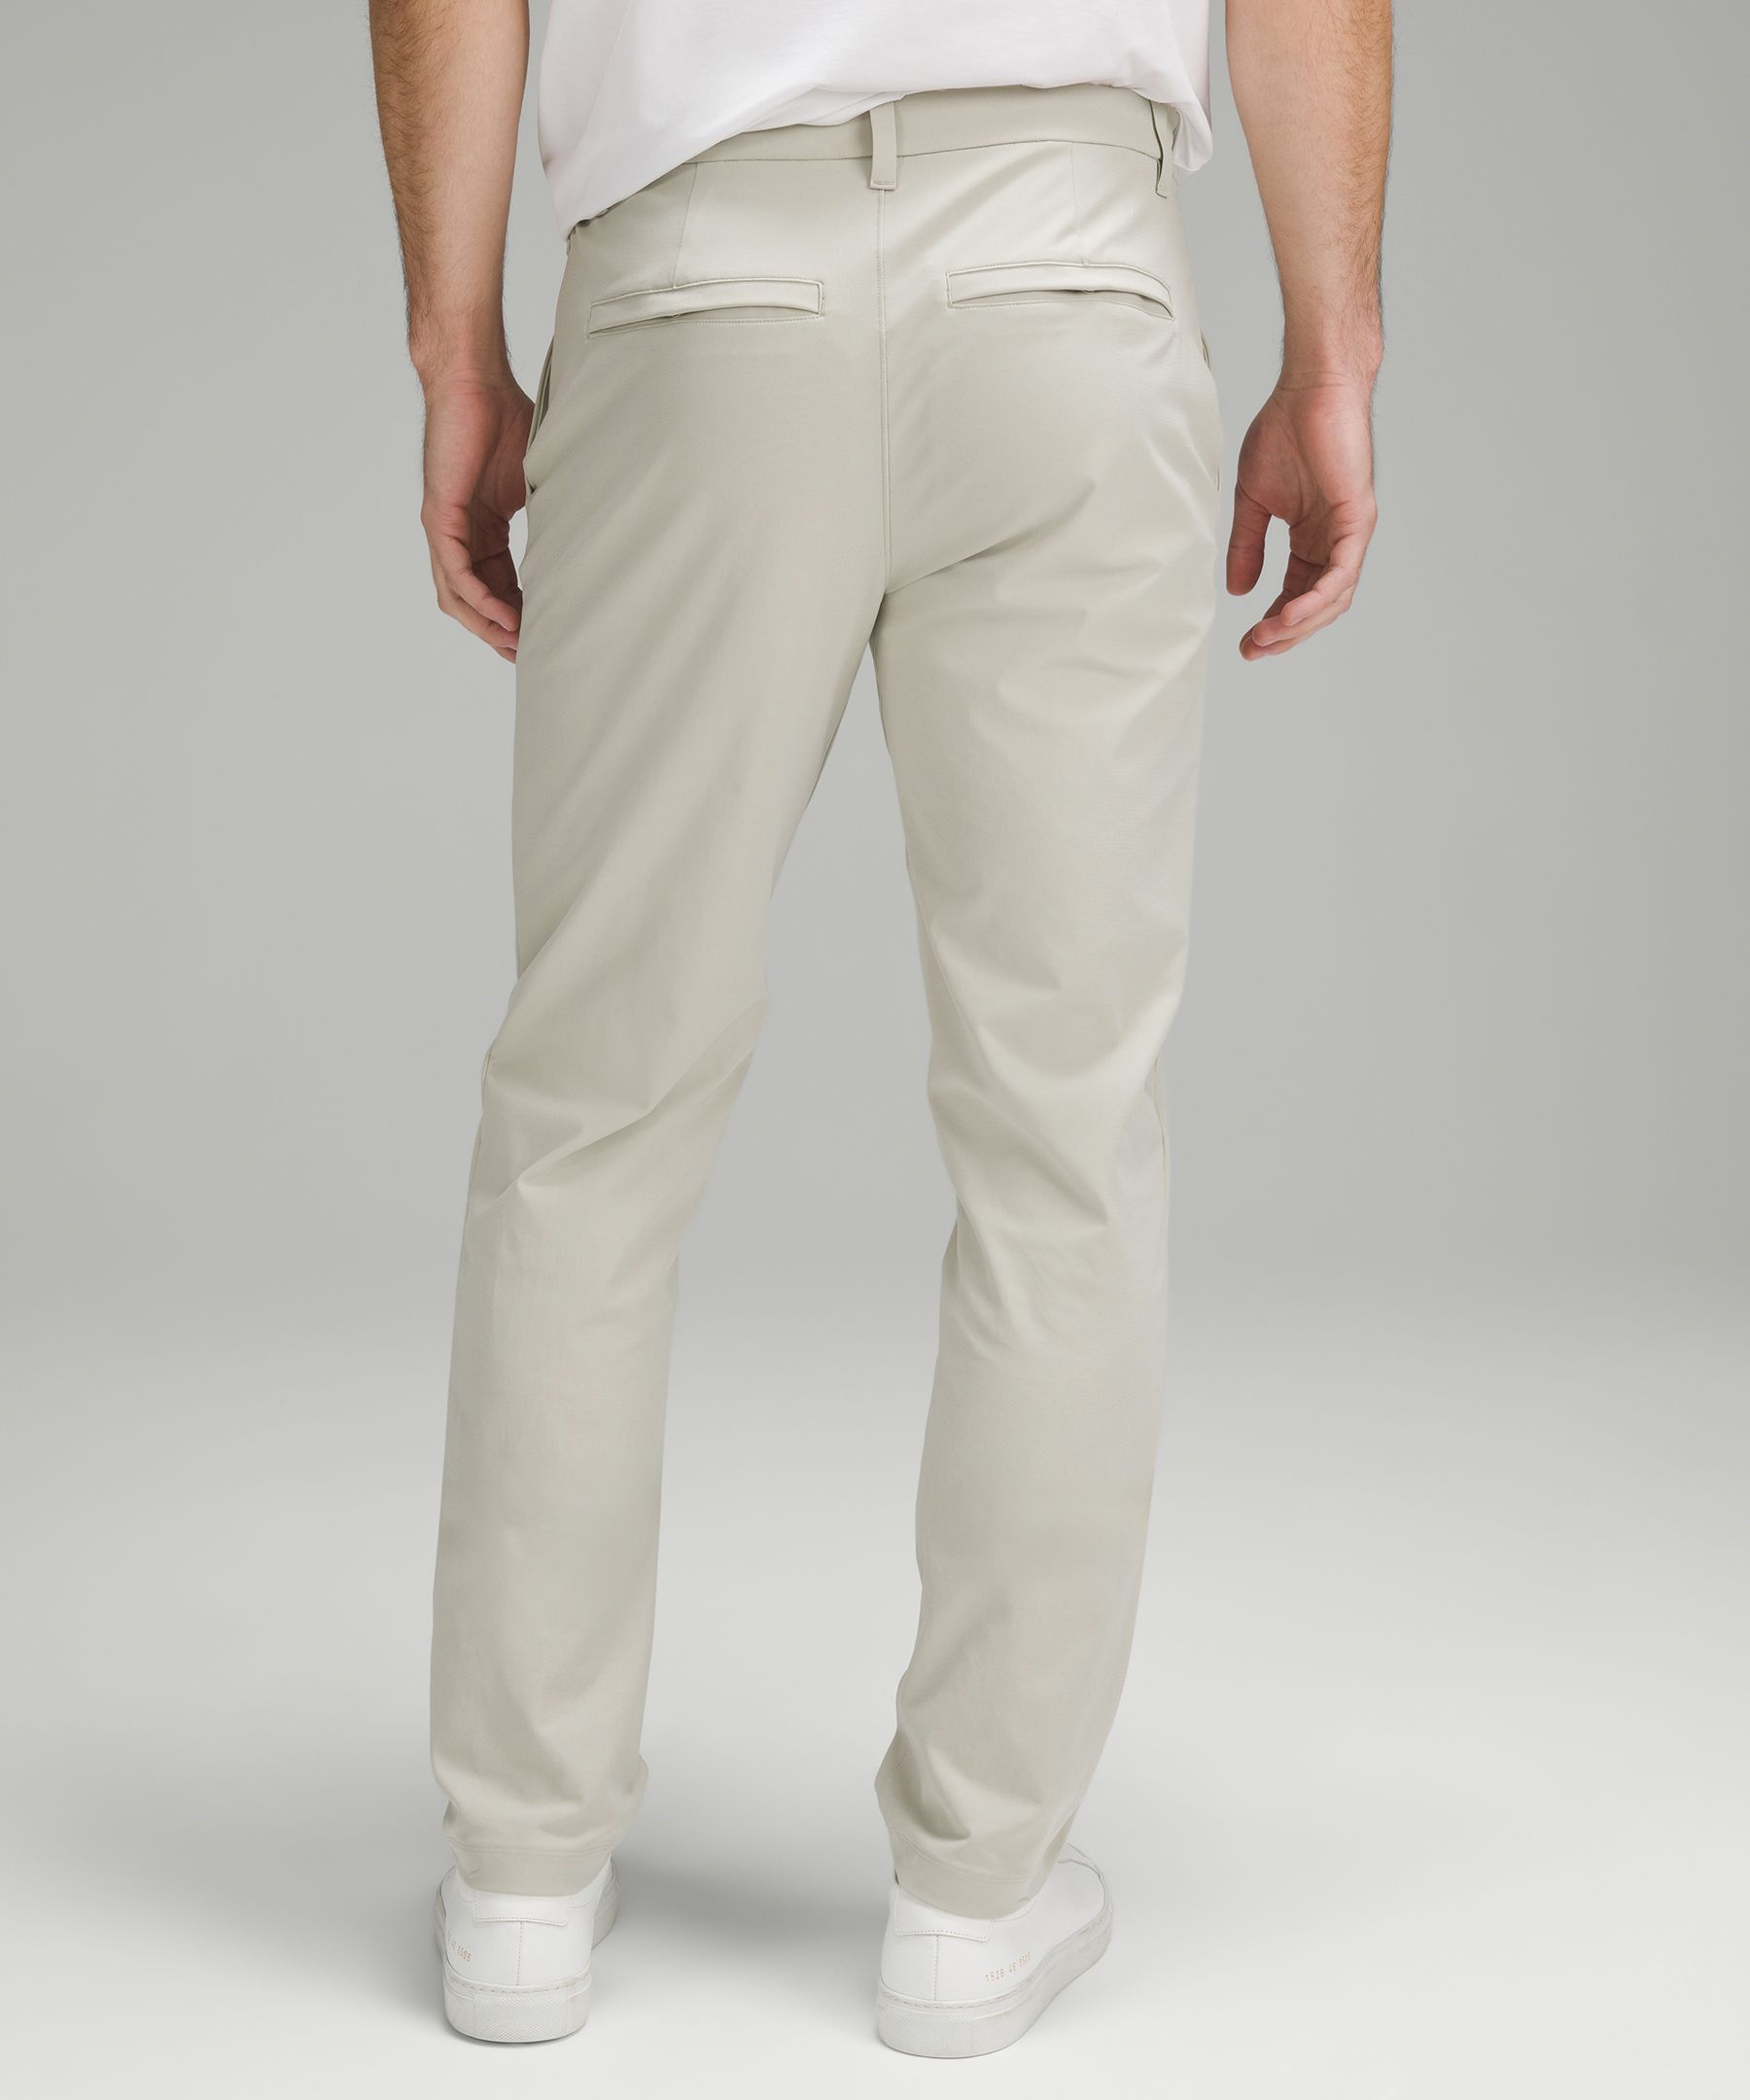 Lululemon Essential High-Rise Trouser 12 Carbon Dust Warpstreme Khaki $138  NWOT